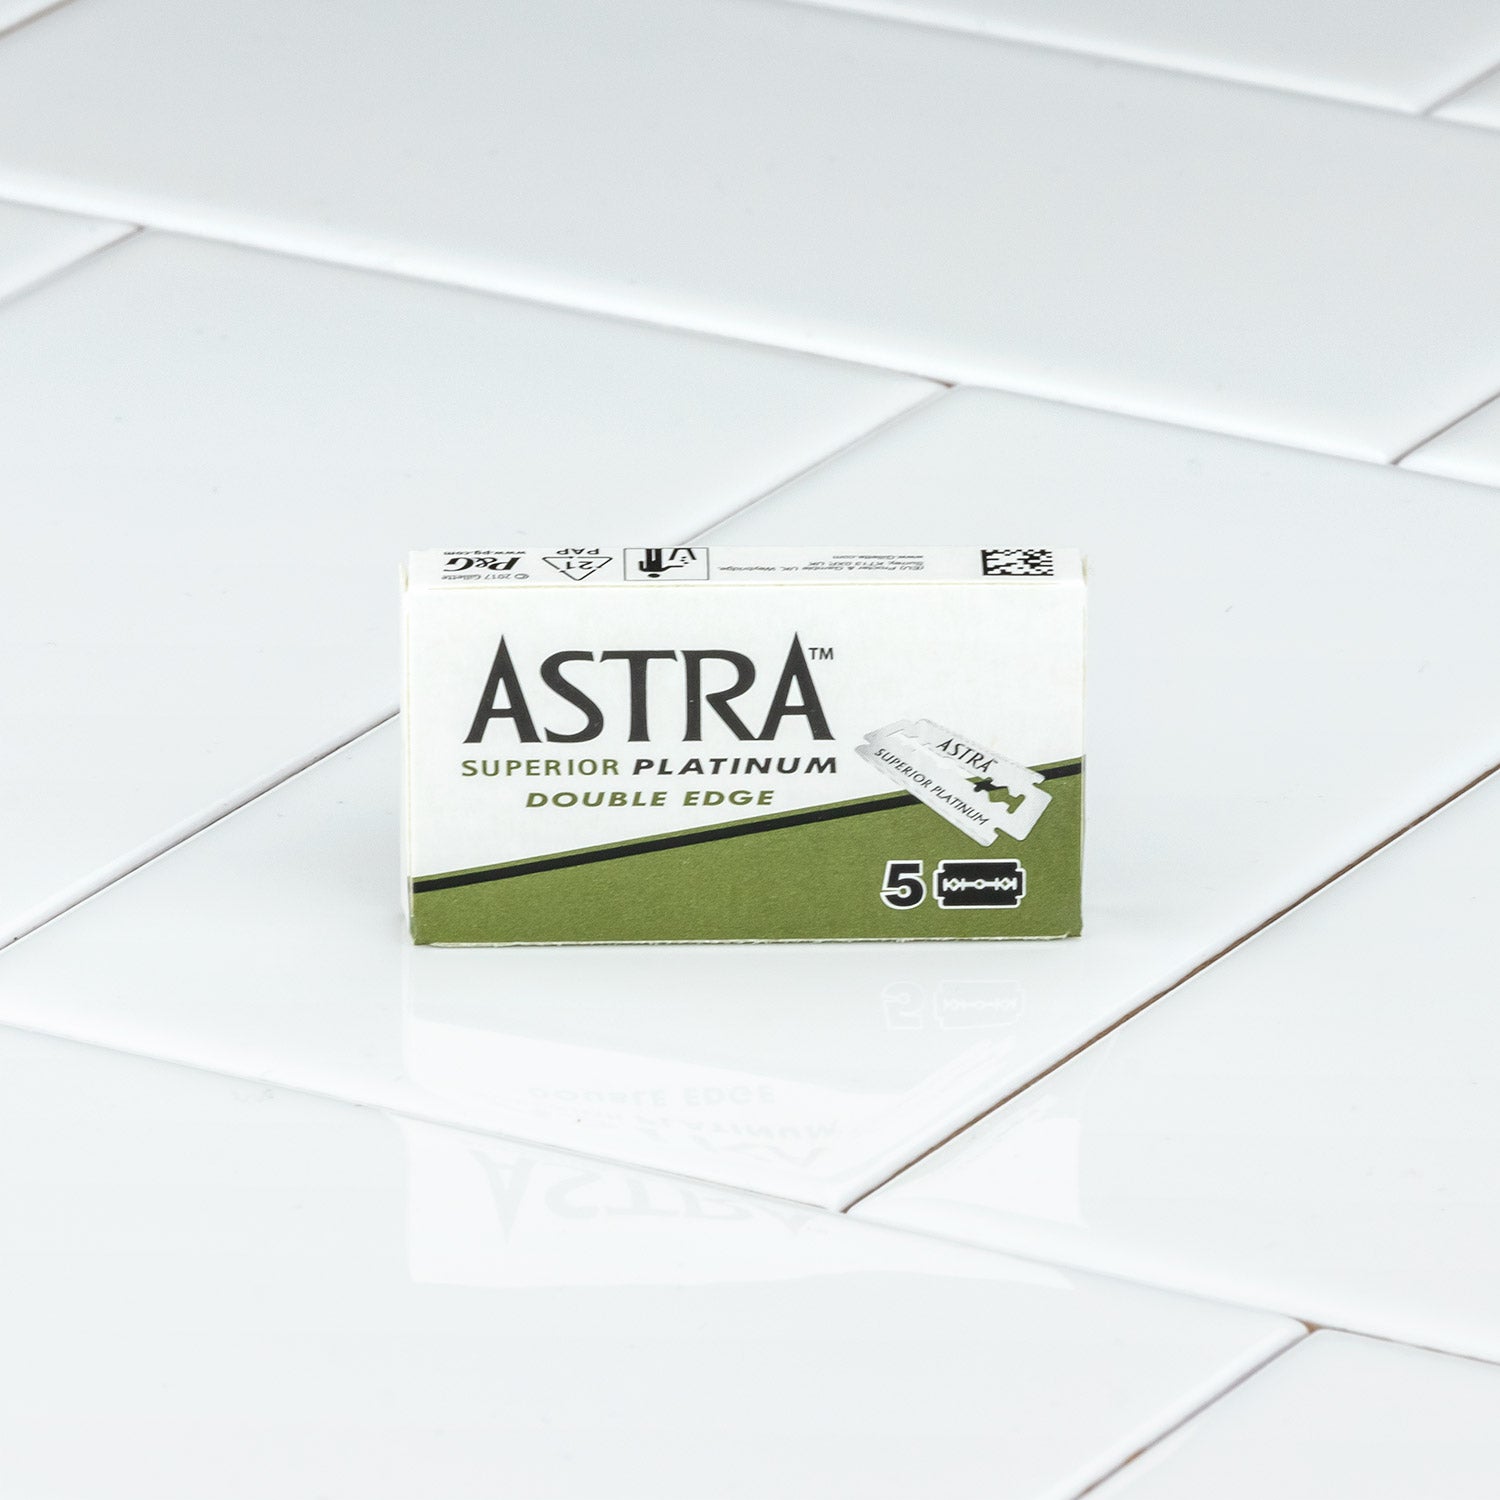 Astra Platinum Double Edge Razor Blades 1 Pack of 5 Blades